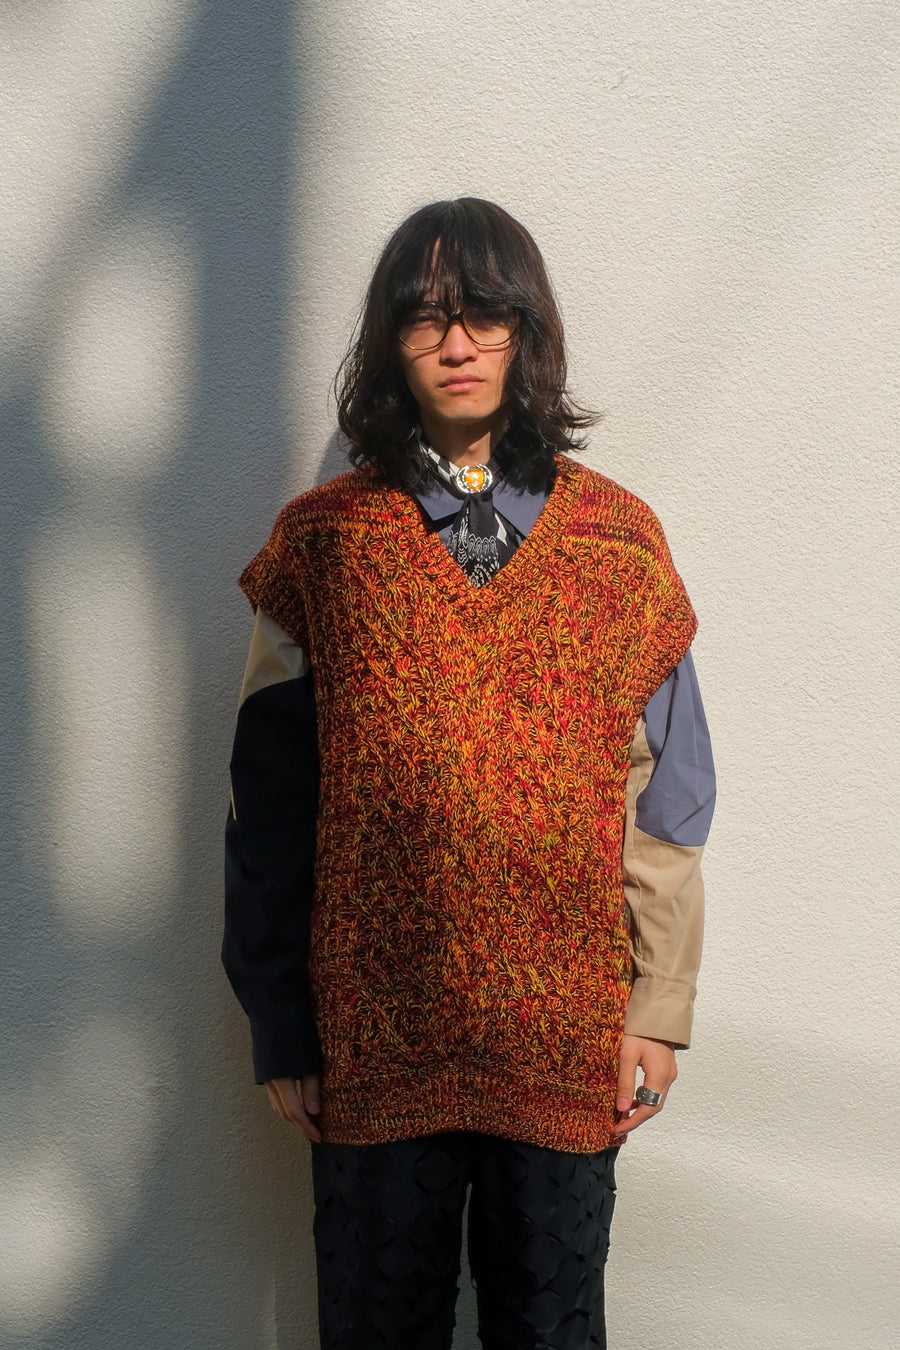 TOGA VIRILIS  Cable knit vest(RED)